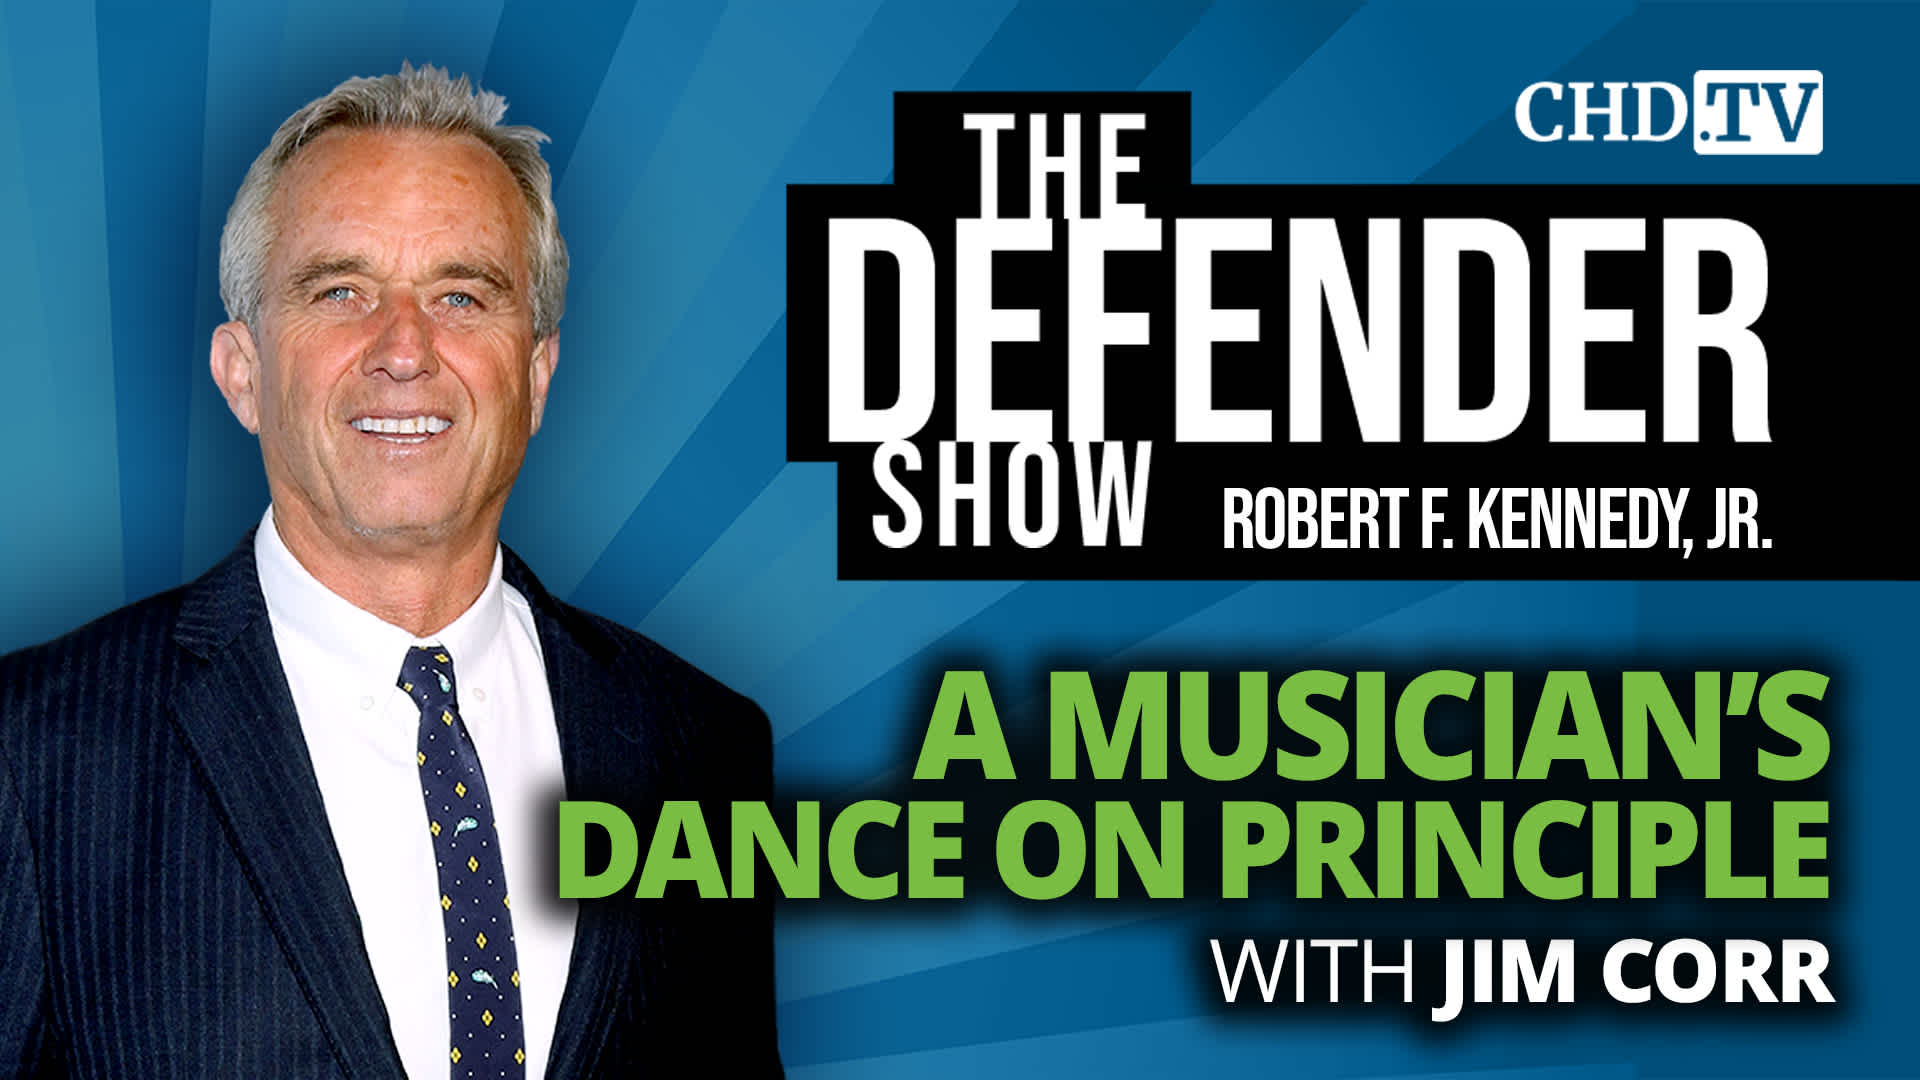 A Musician’s Dance on Principle With Jim Corr